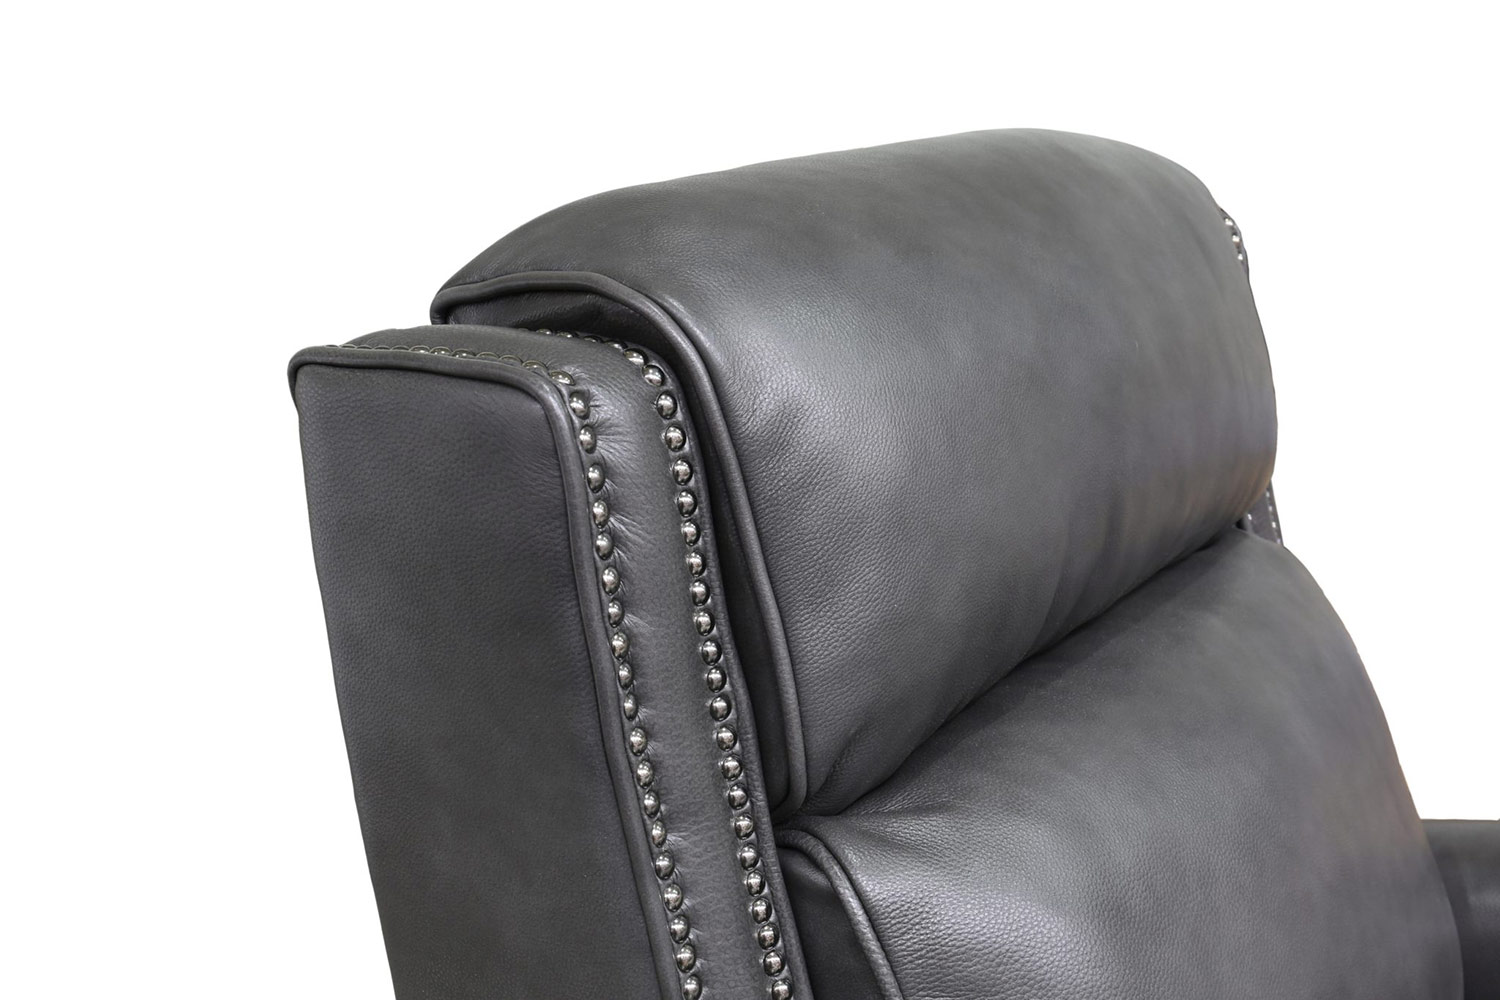 Barcalounger Barrett Power Recliner Chair with Power Head Rest - Wrenn Gray/all leather